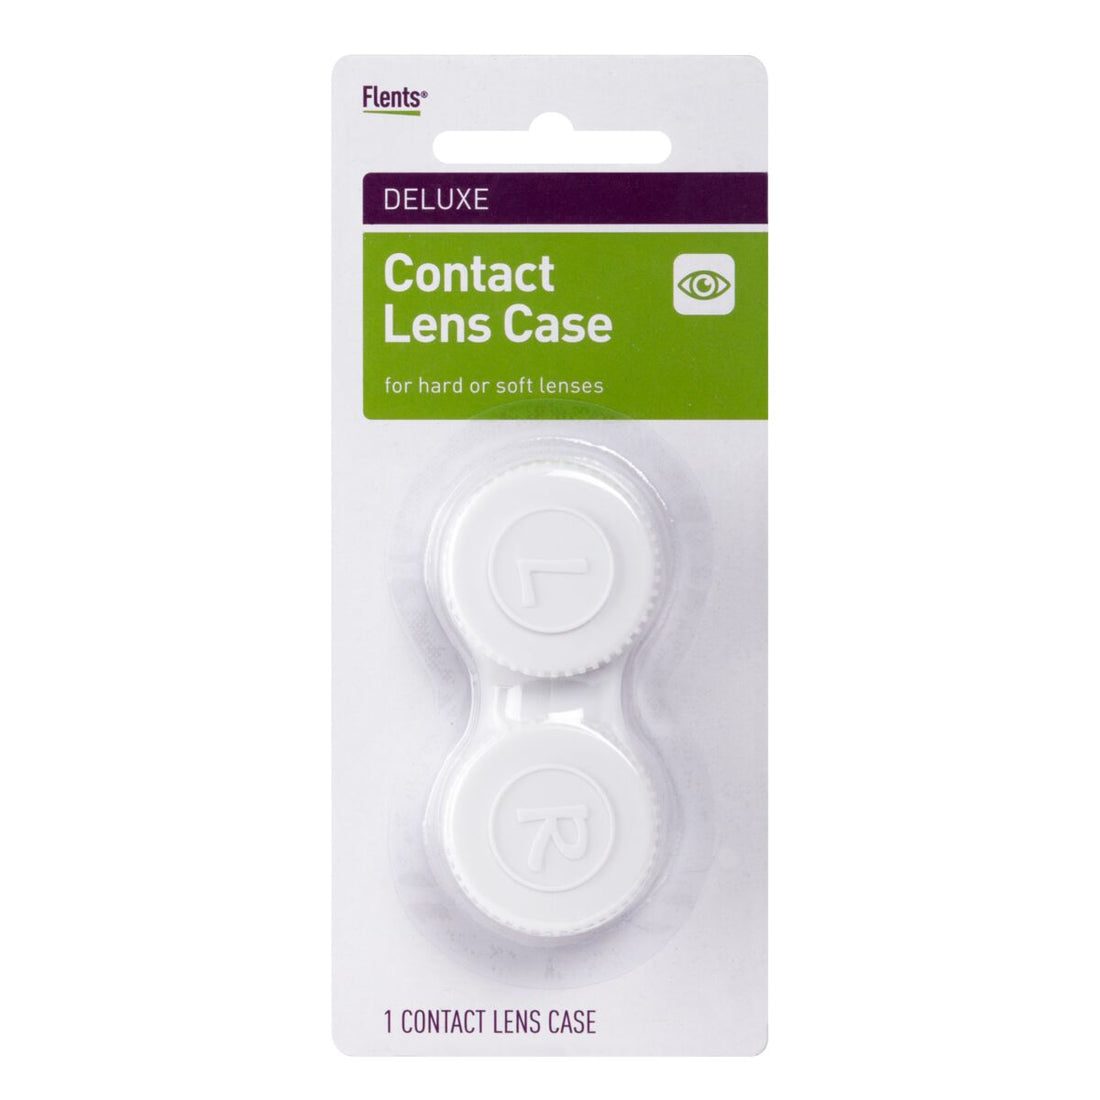 Flents® Deluxe Contact Lens Case